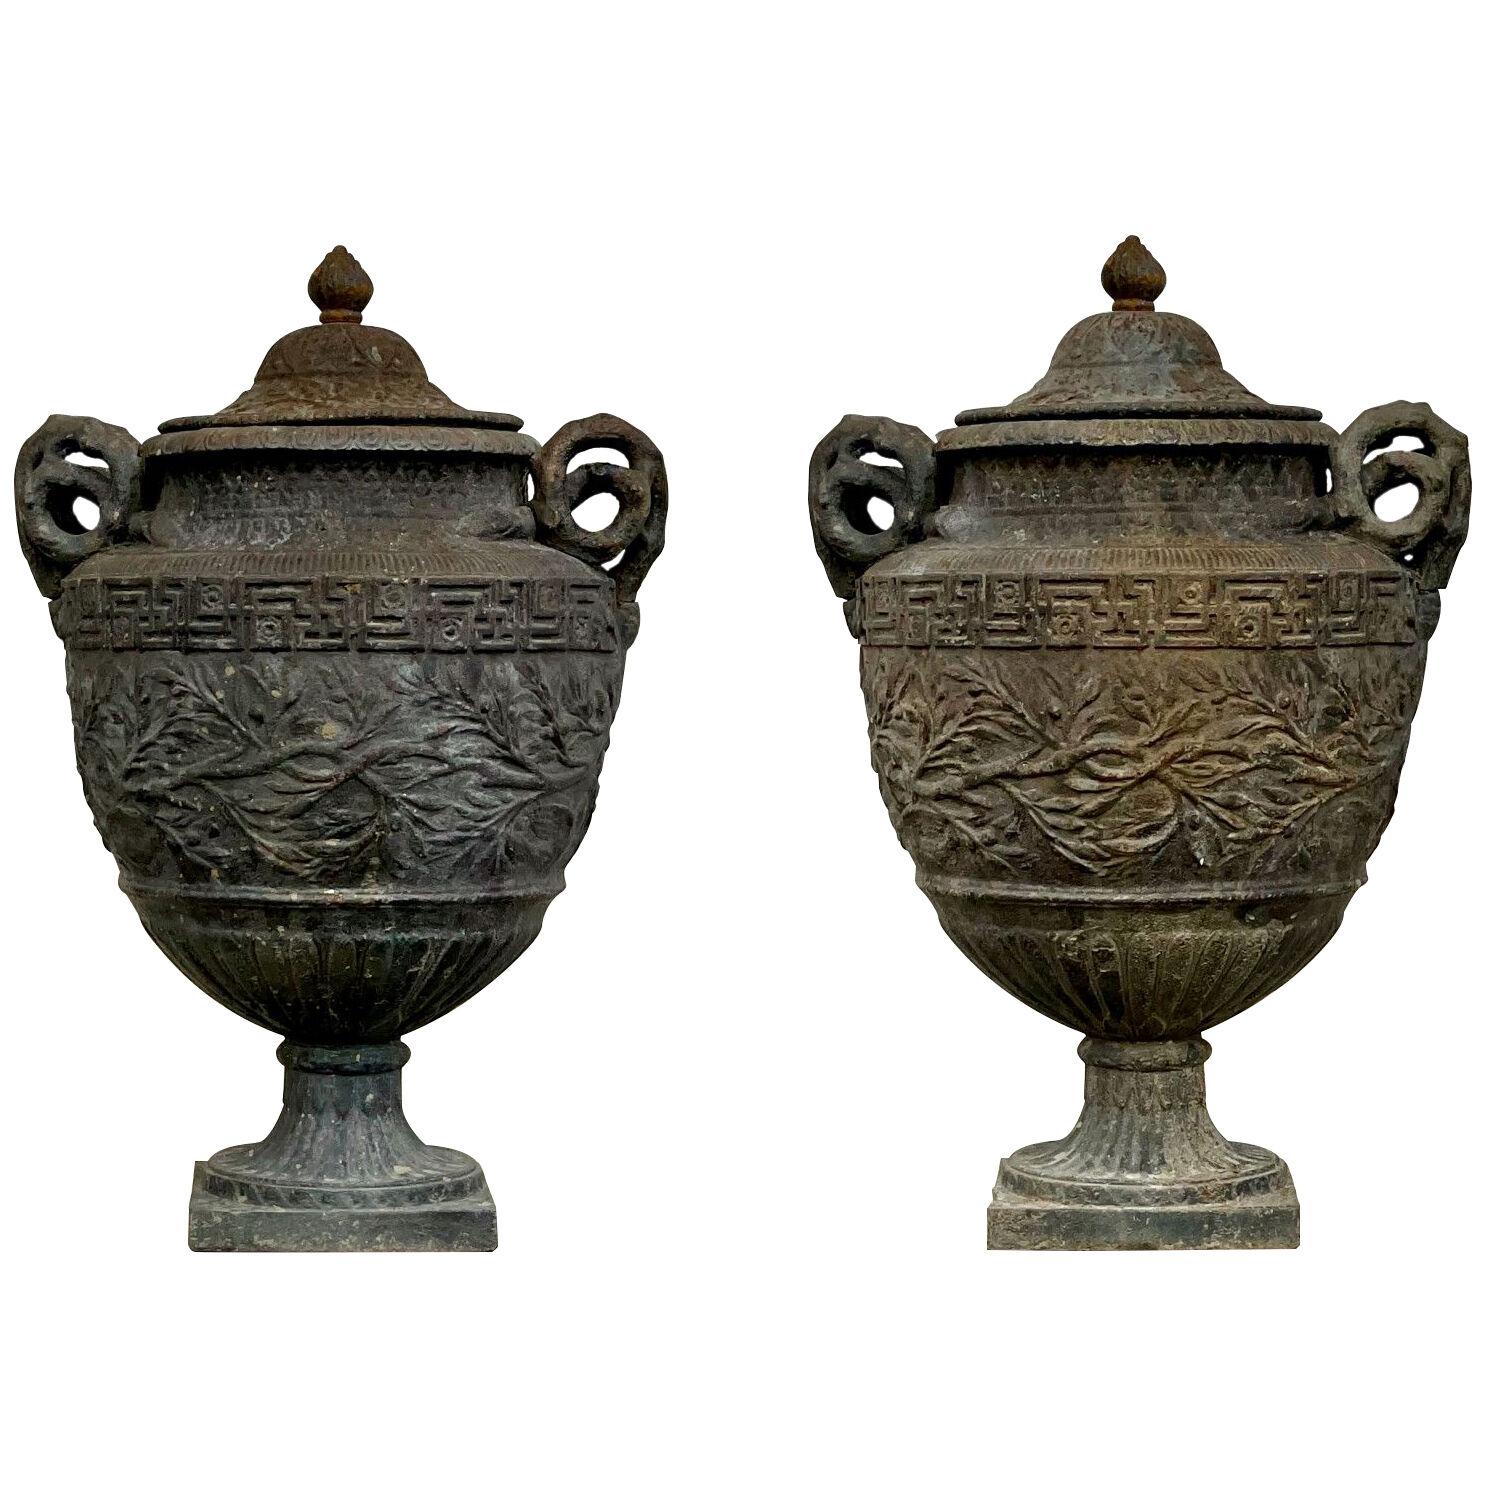 Pair of 19th century cast iron lidded vases